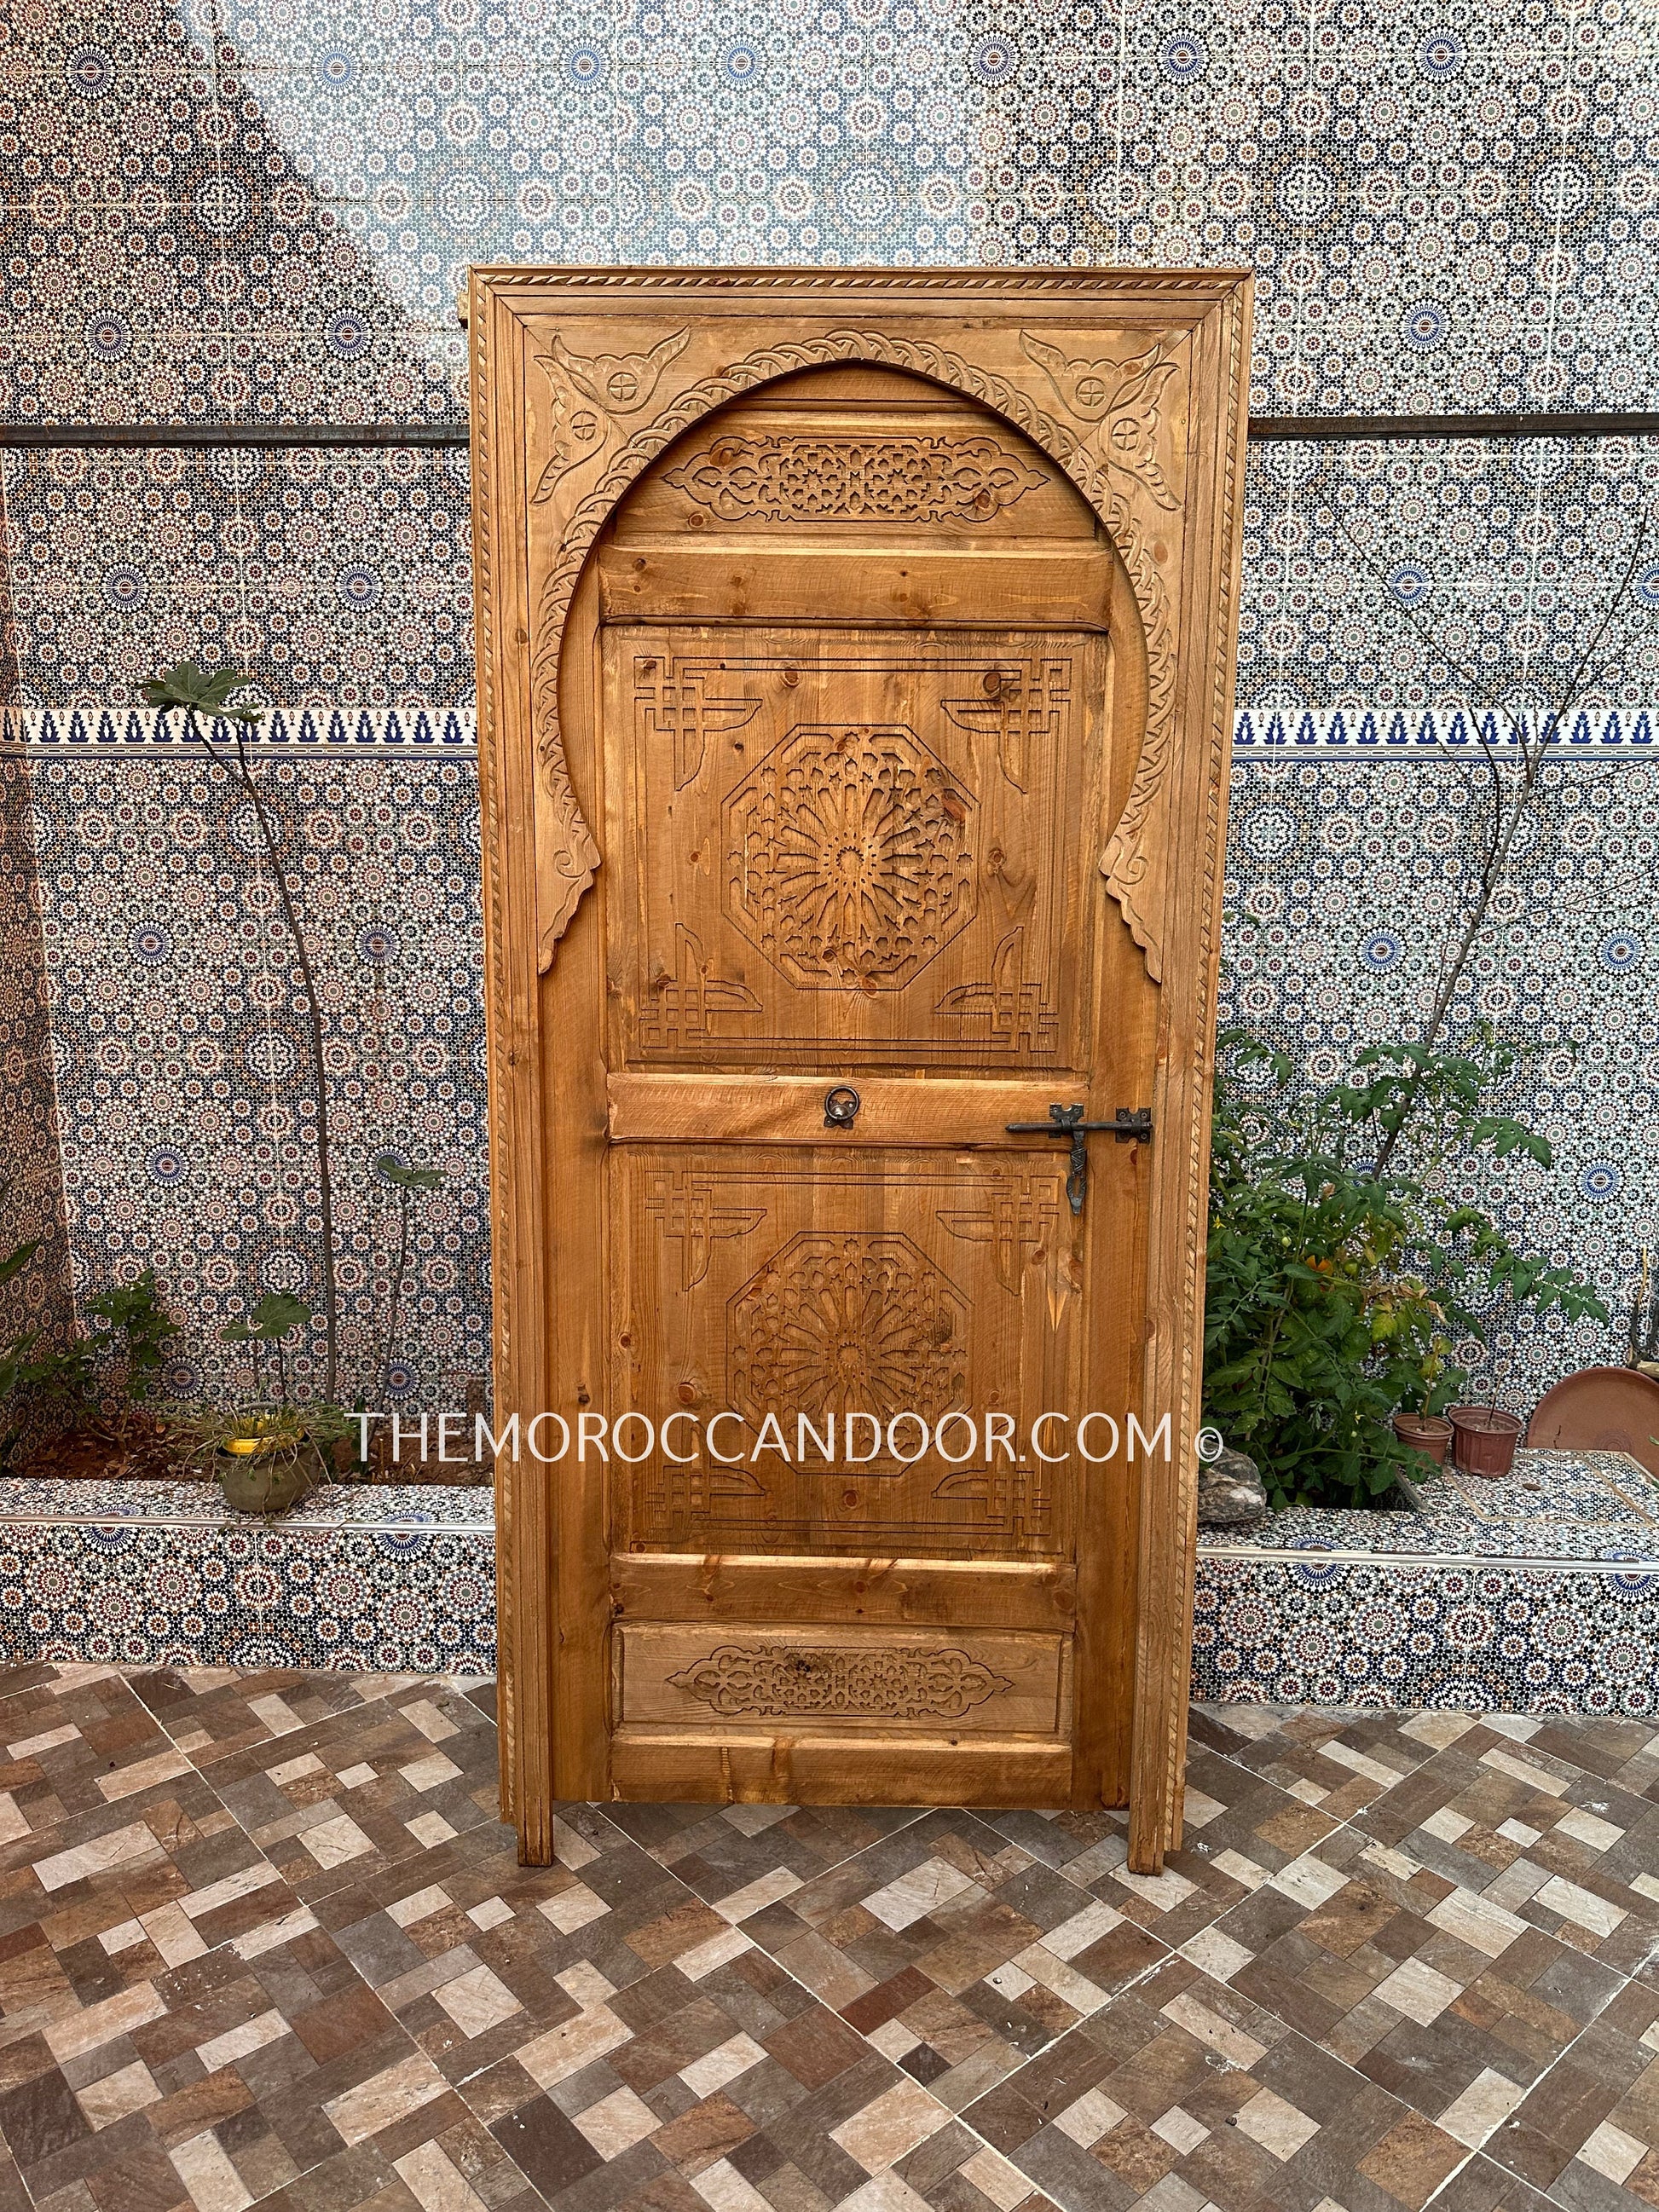 Premium cedar wood door inspired by Moroccan tradition